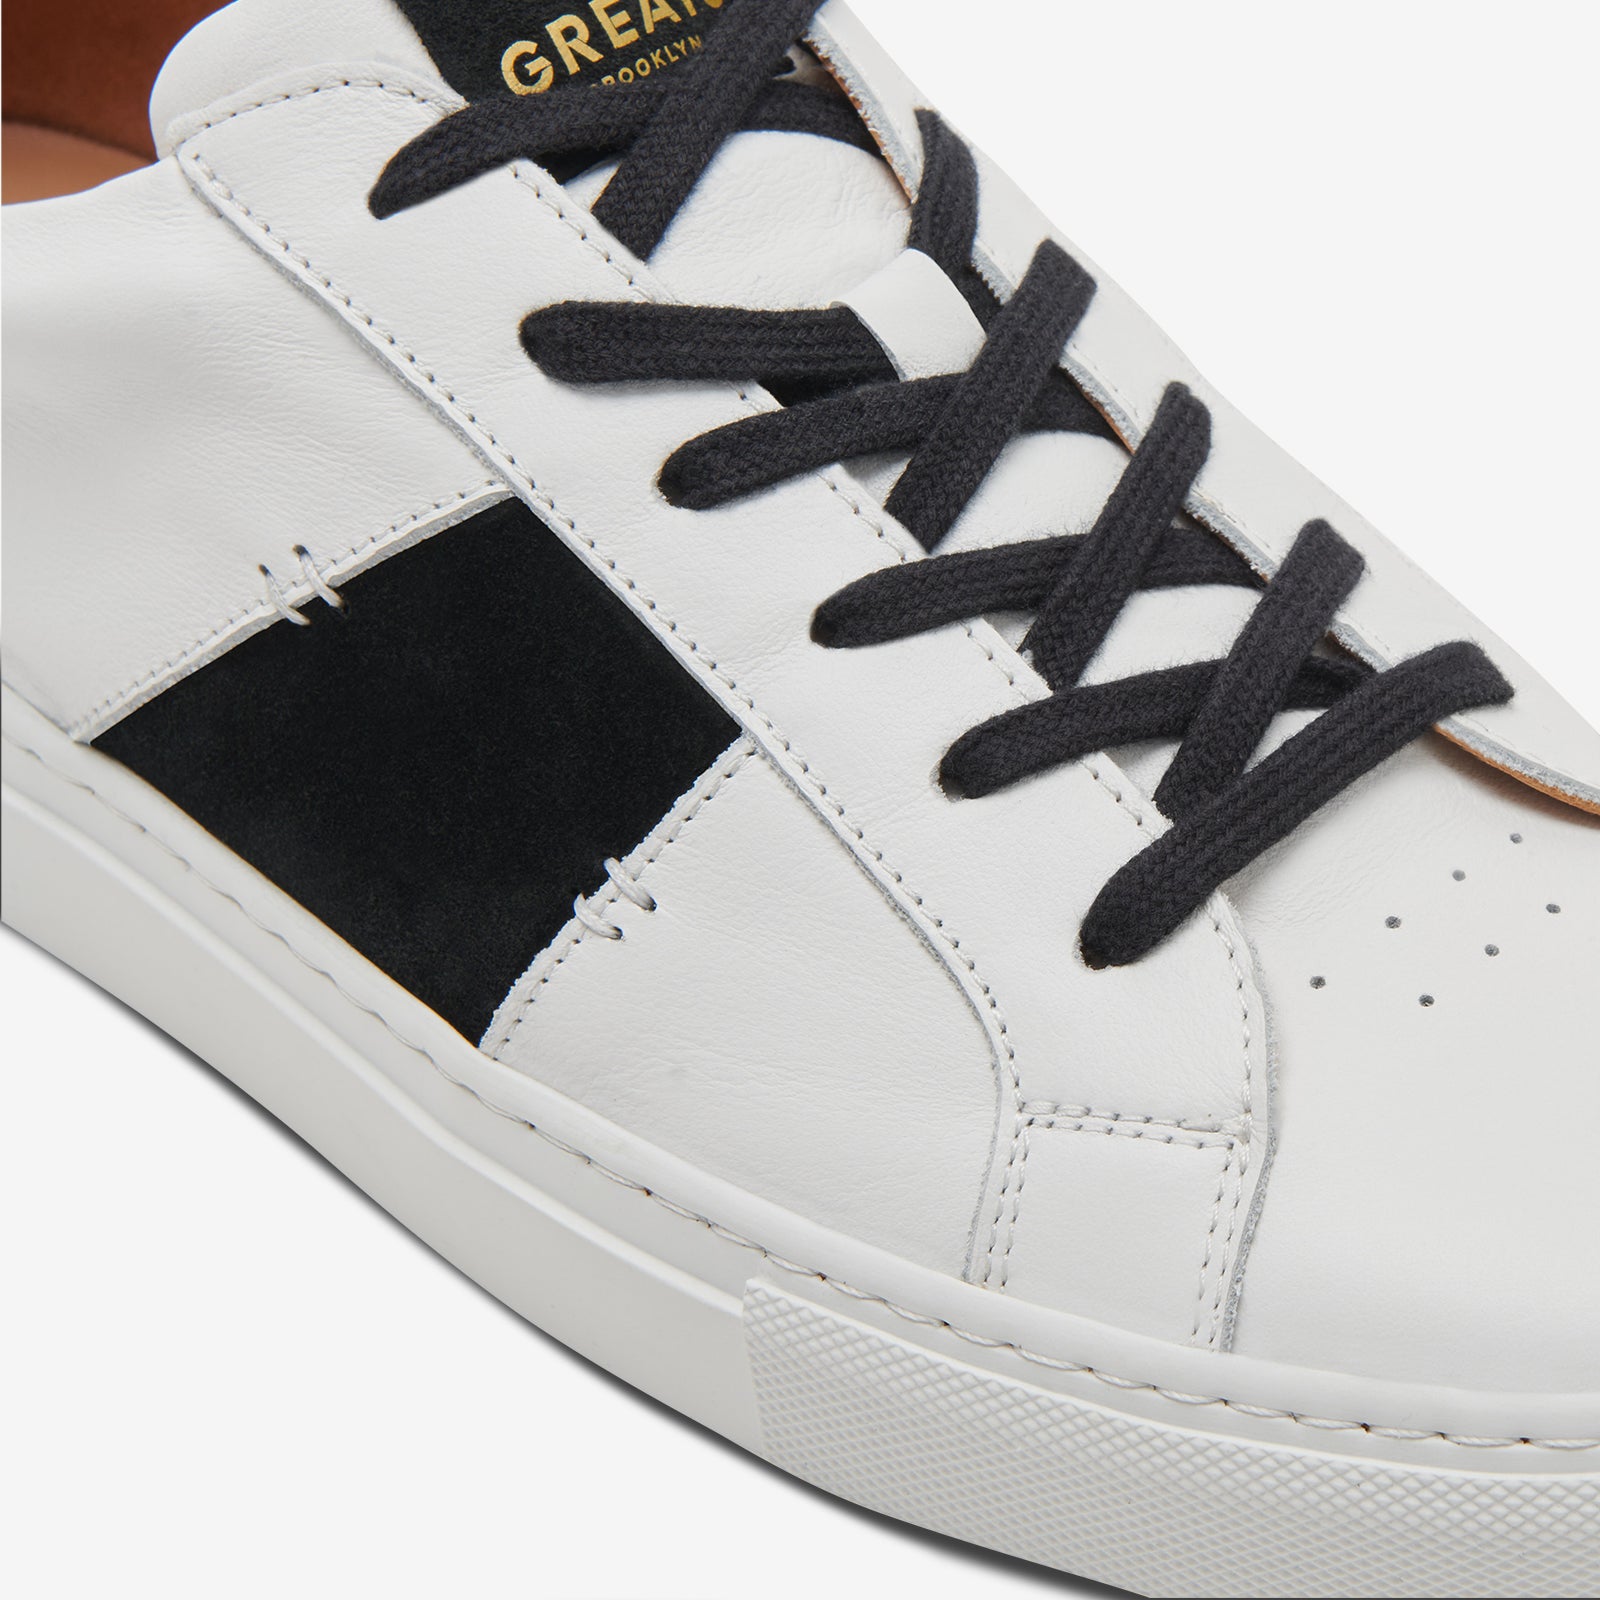 Greats - The Royale 2.0 - White/Black - Men's Shoe – GREATS